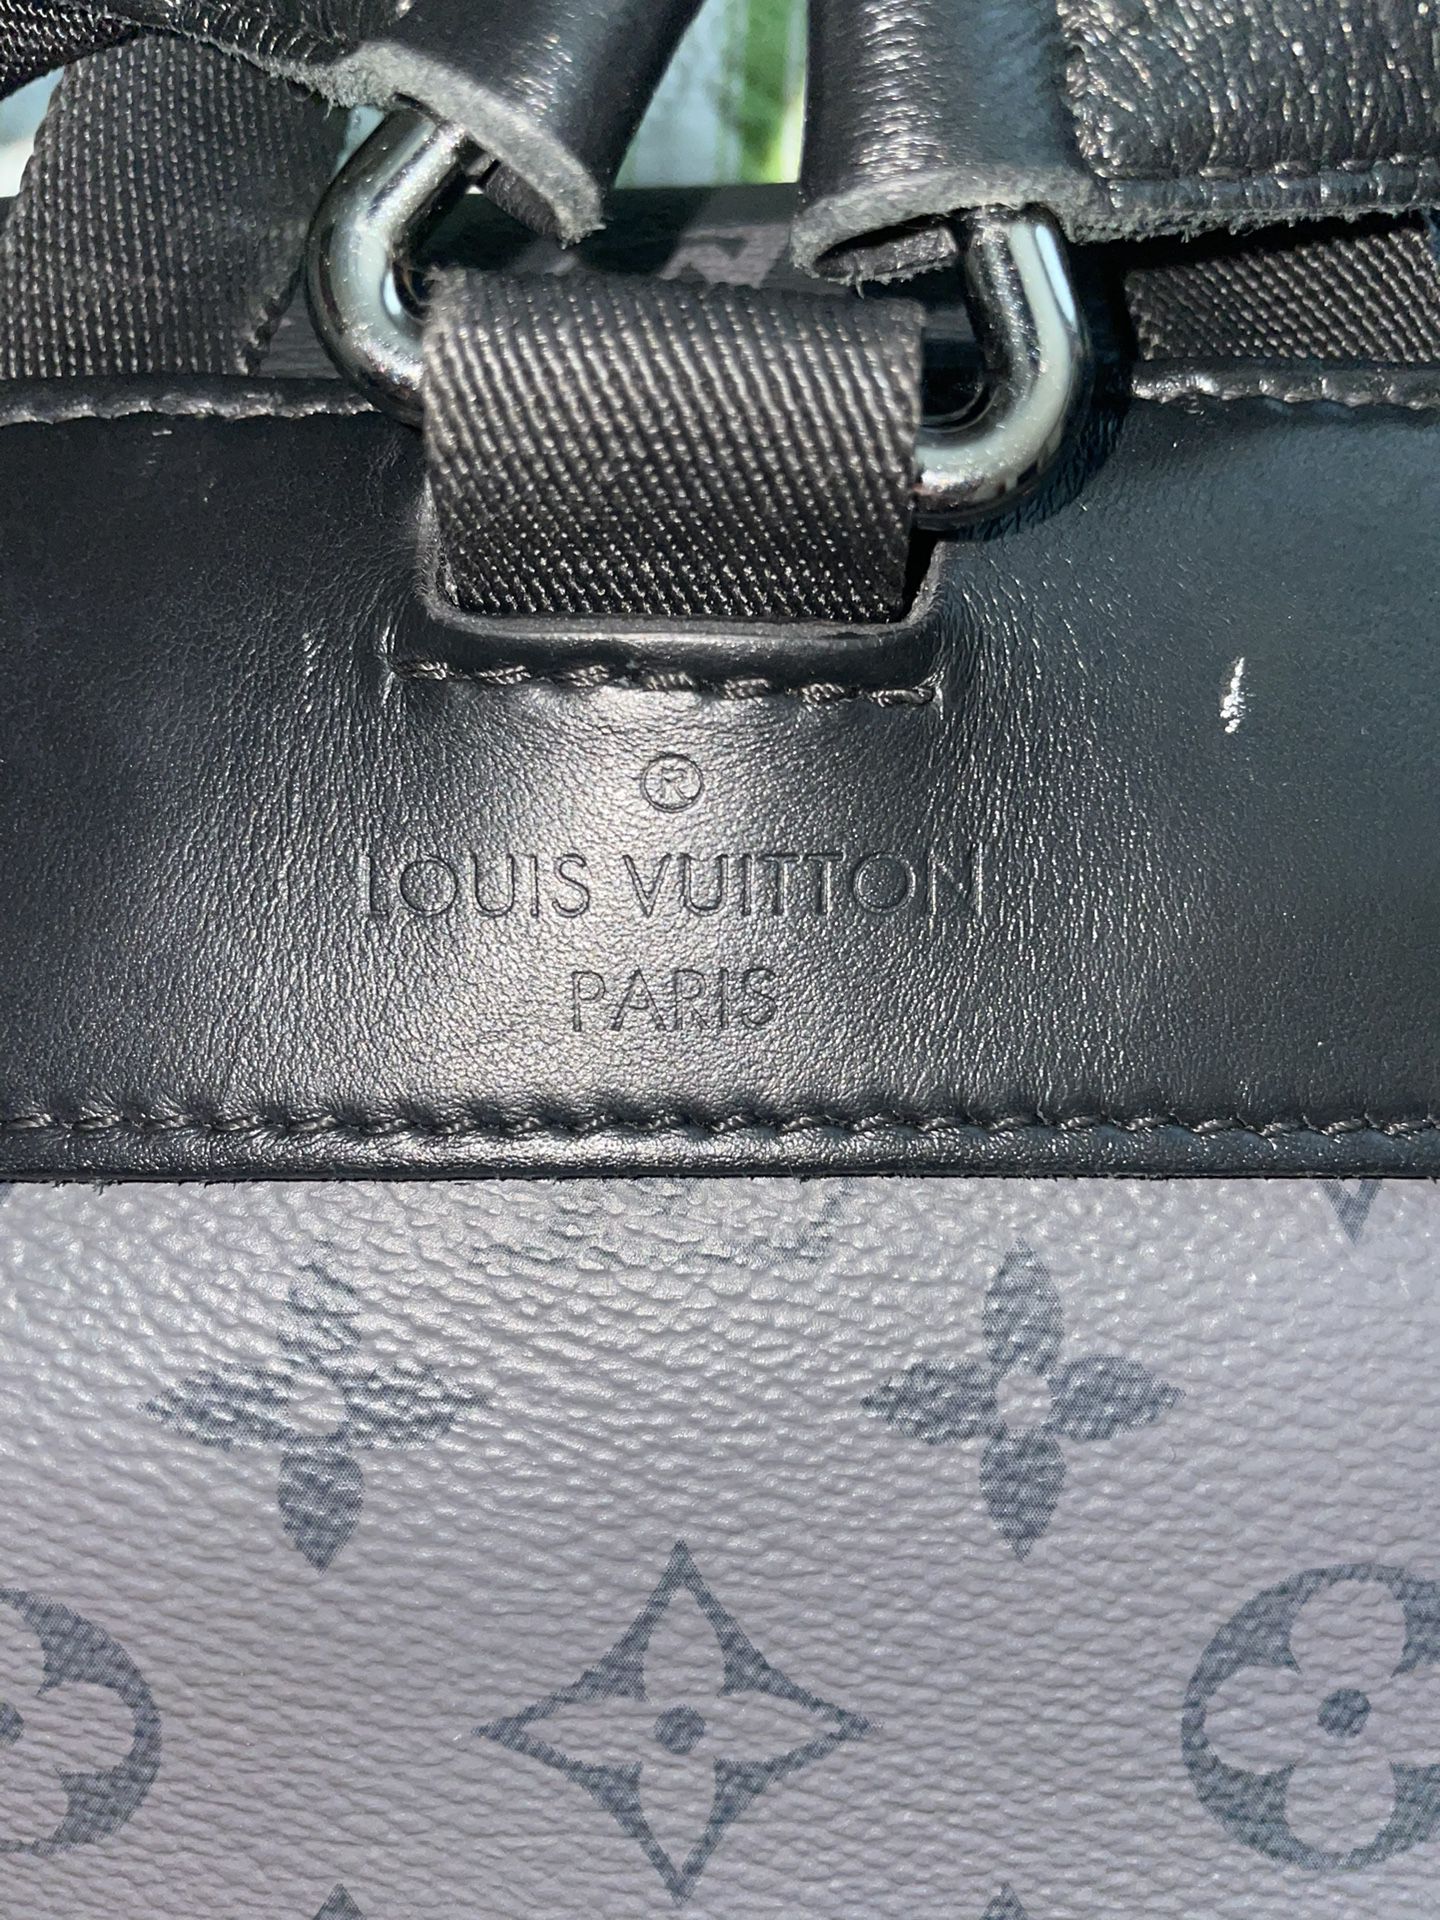 Louis Vuitton for Sale in El Paso, TX - OfferUp